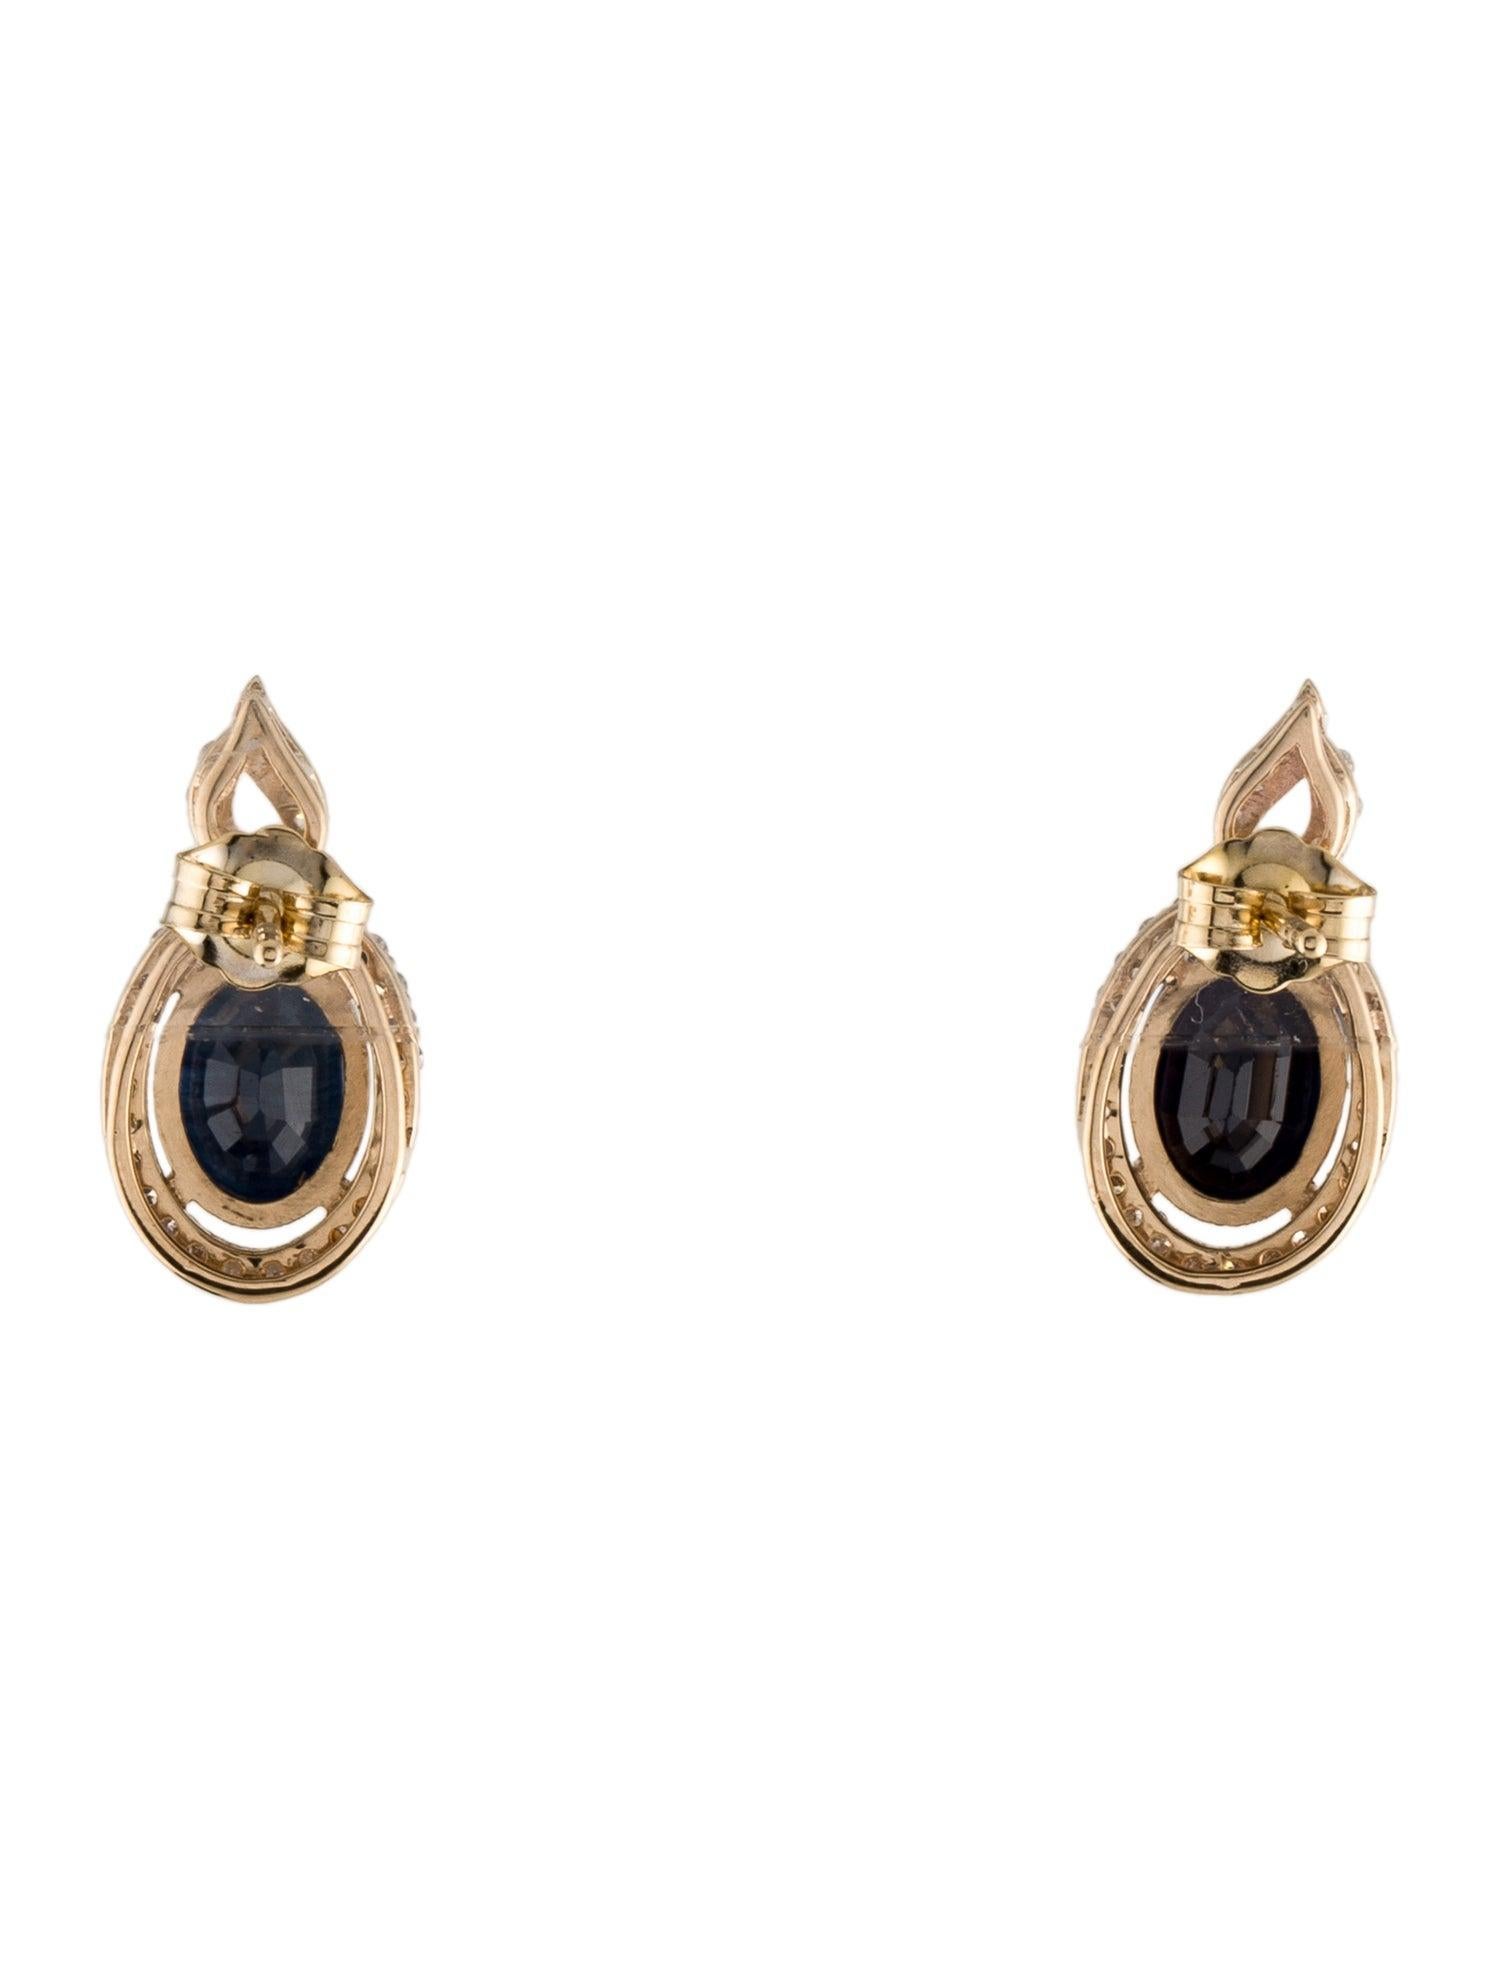 Brilliant Cut Exquisite 14K Sapphire & Diamond Drop Earrings - Elegant Luxury Jewelry For Sale